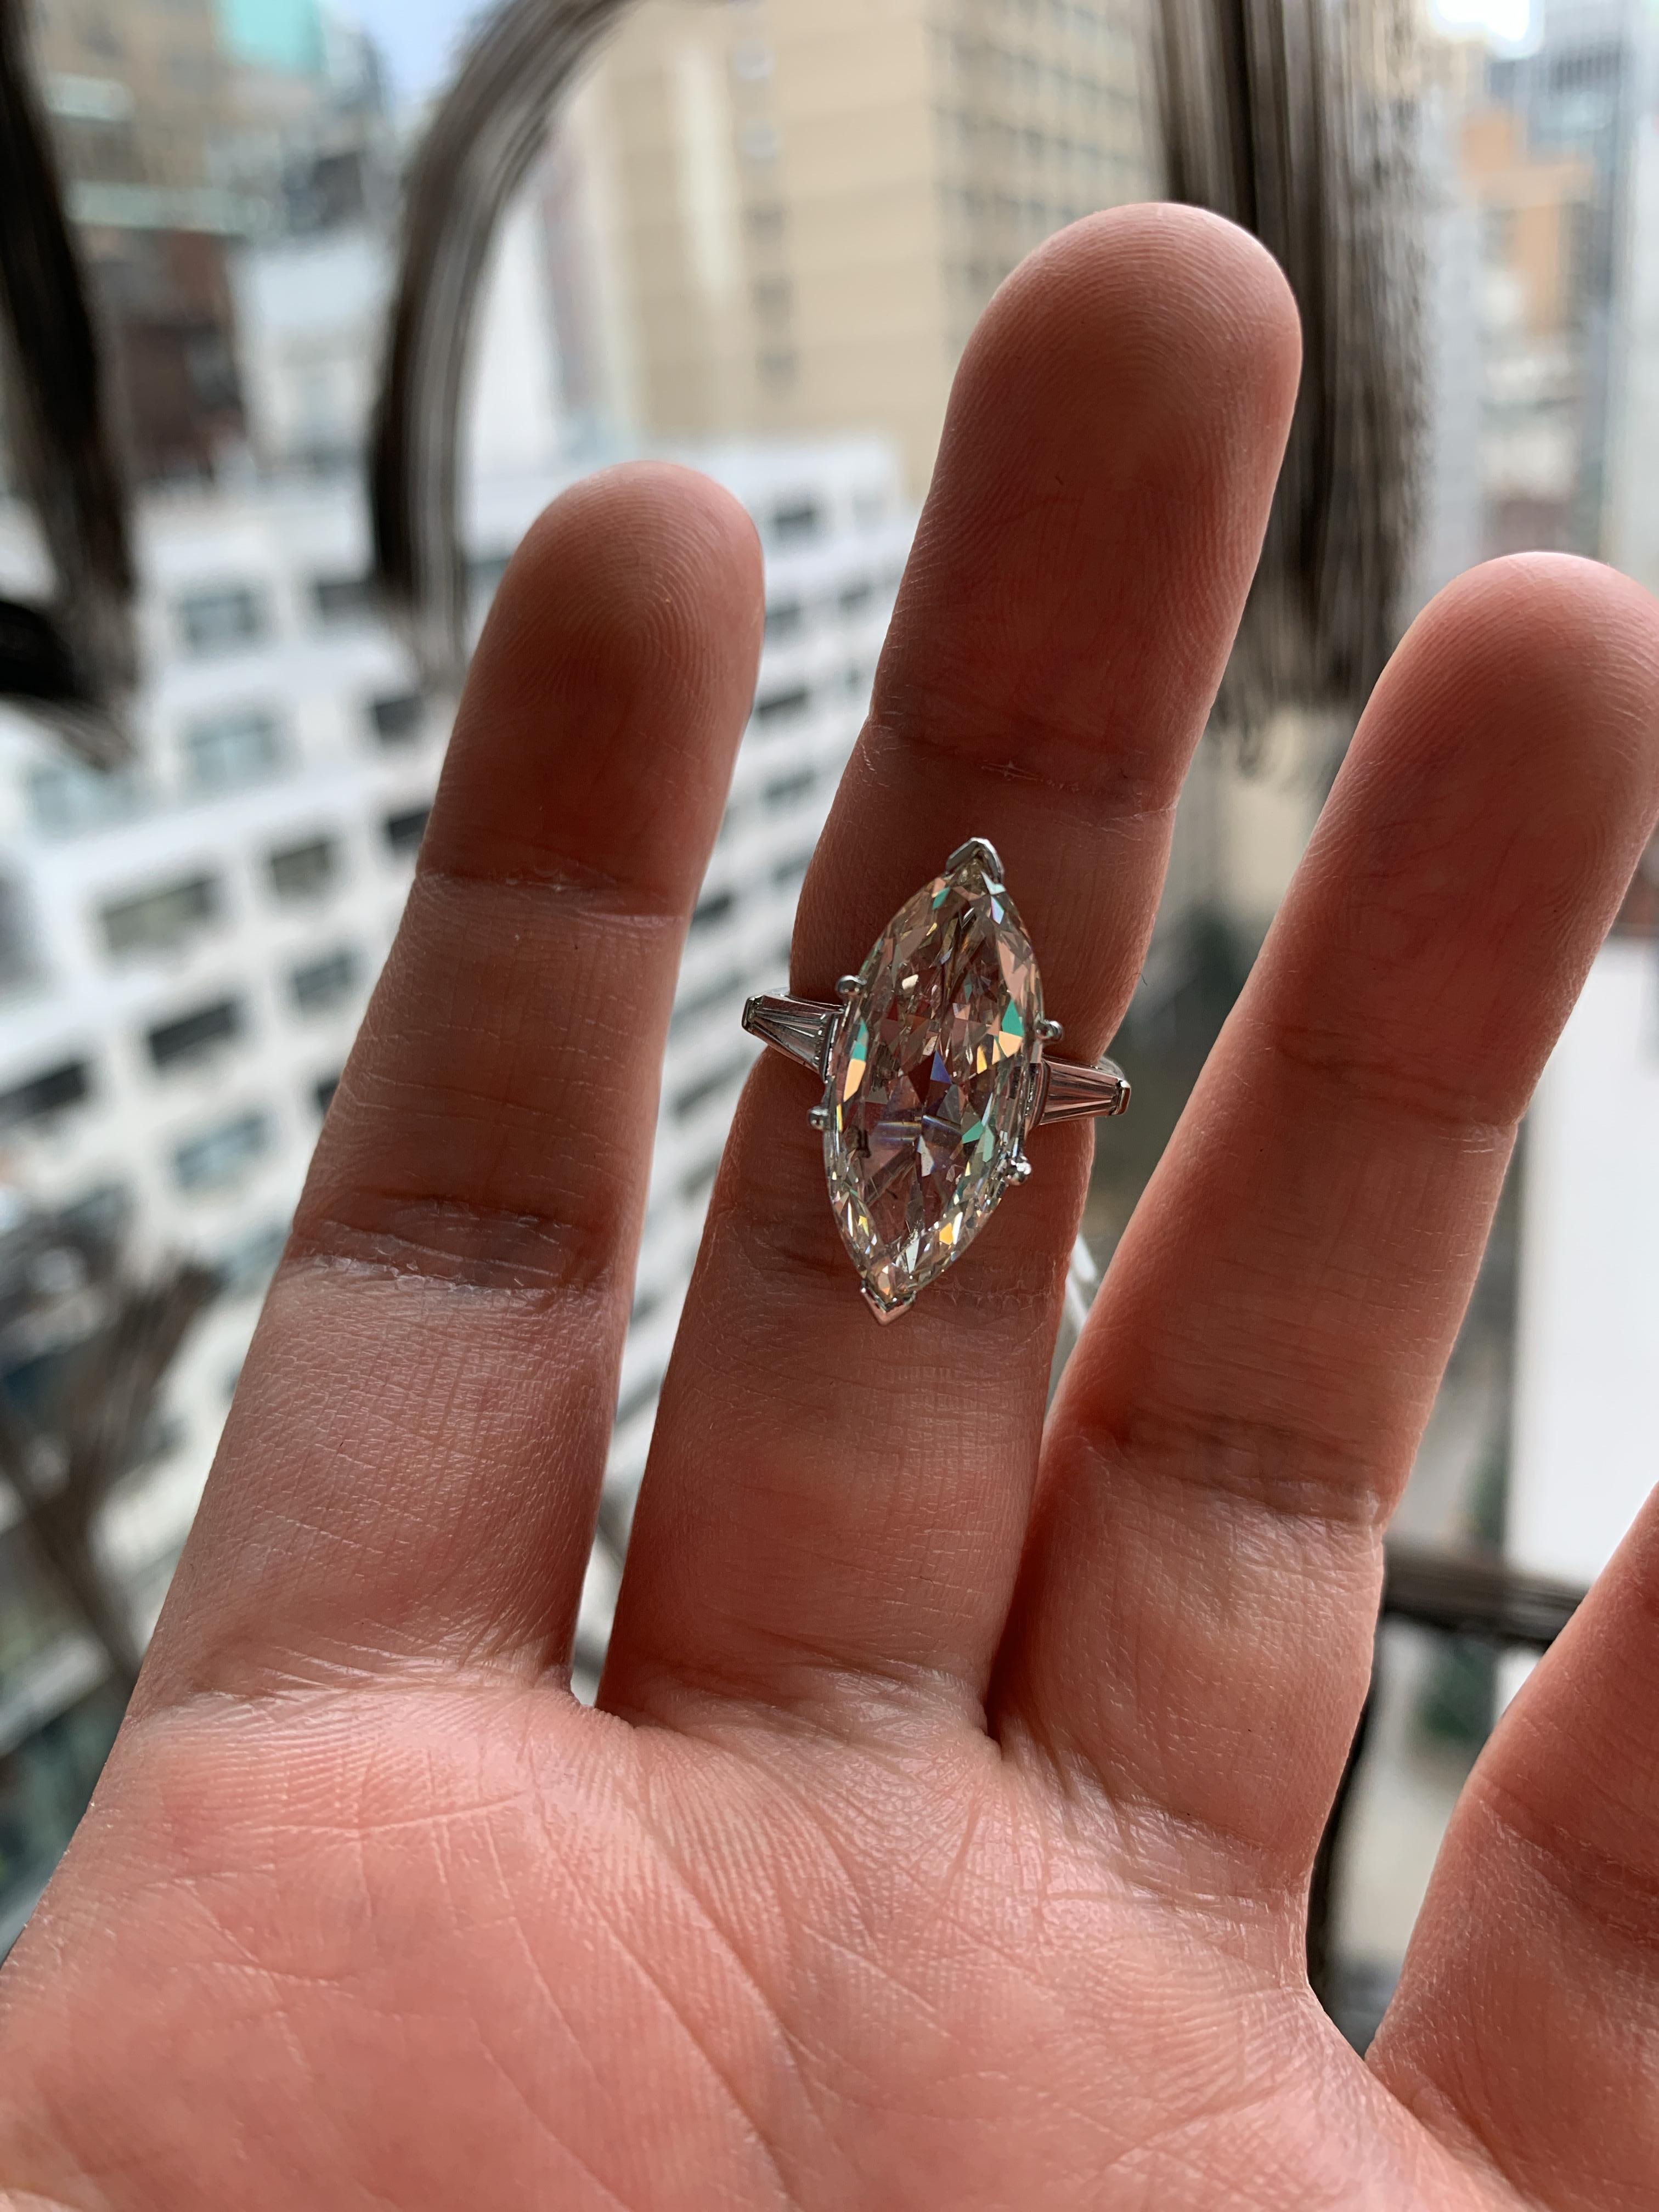 3 carat marquise diamond ring